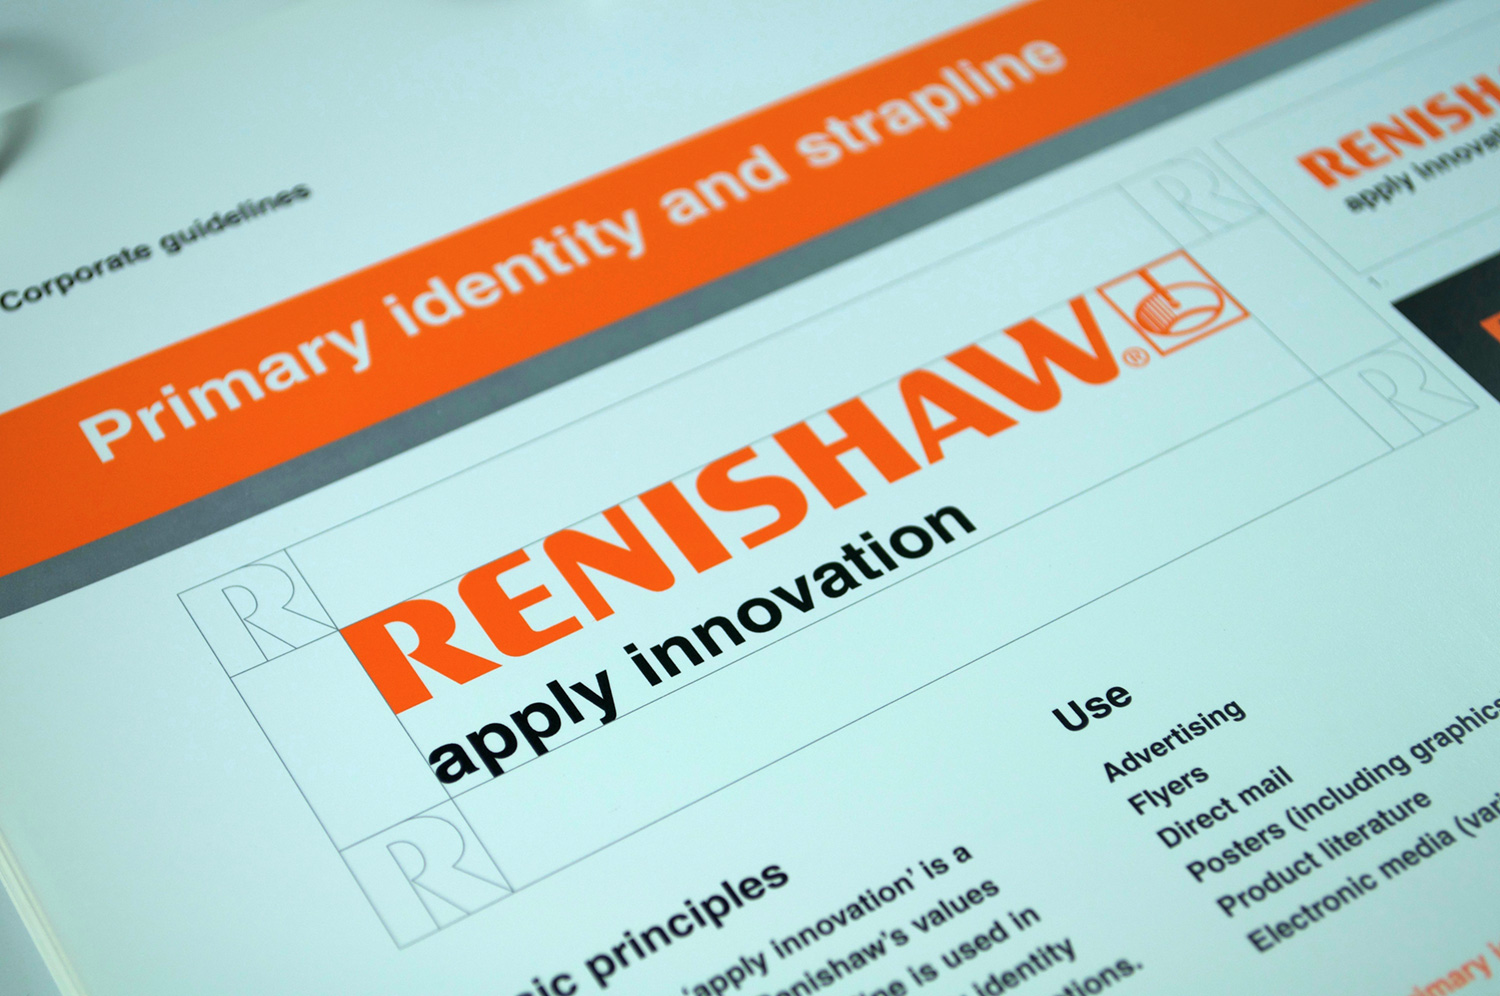 Renishaw corporate guidelines